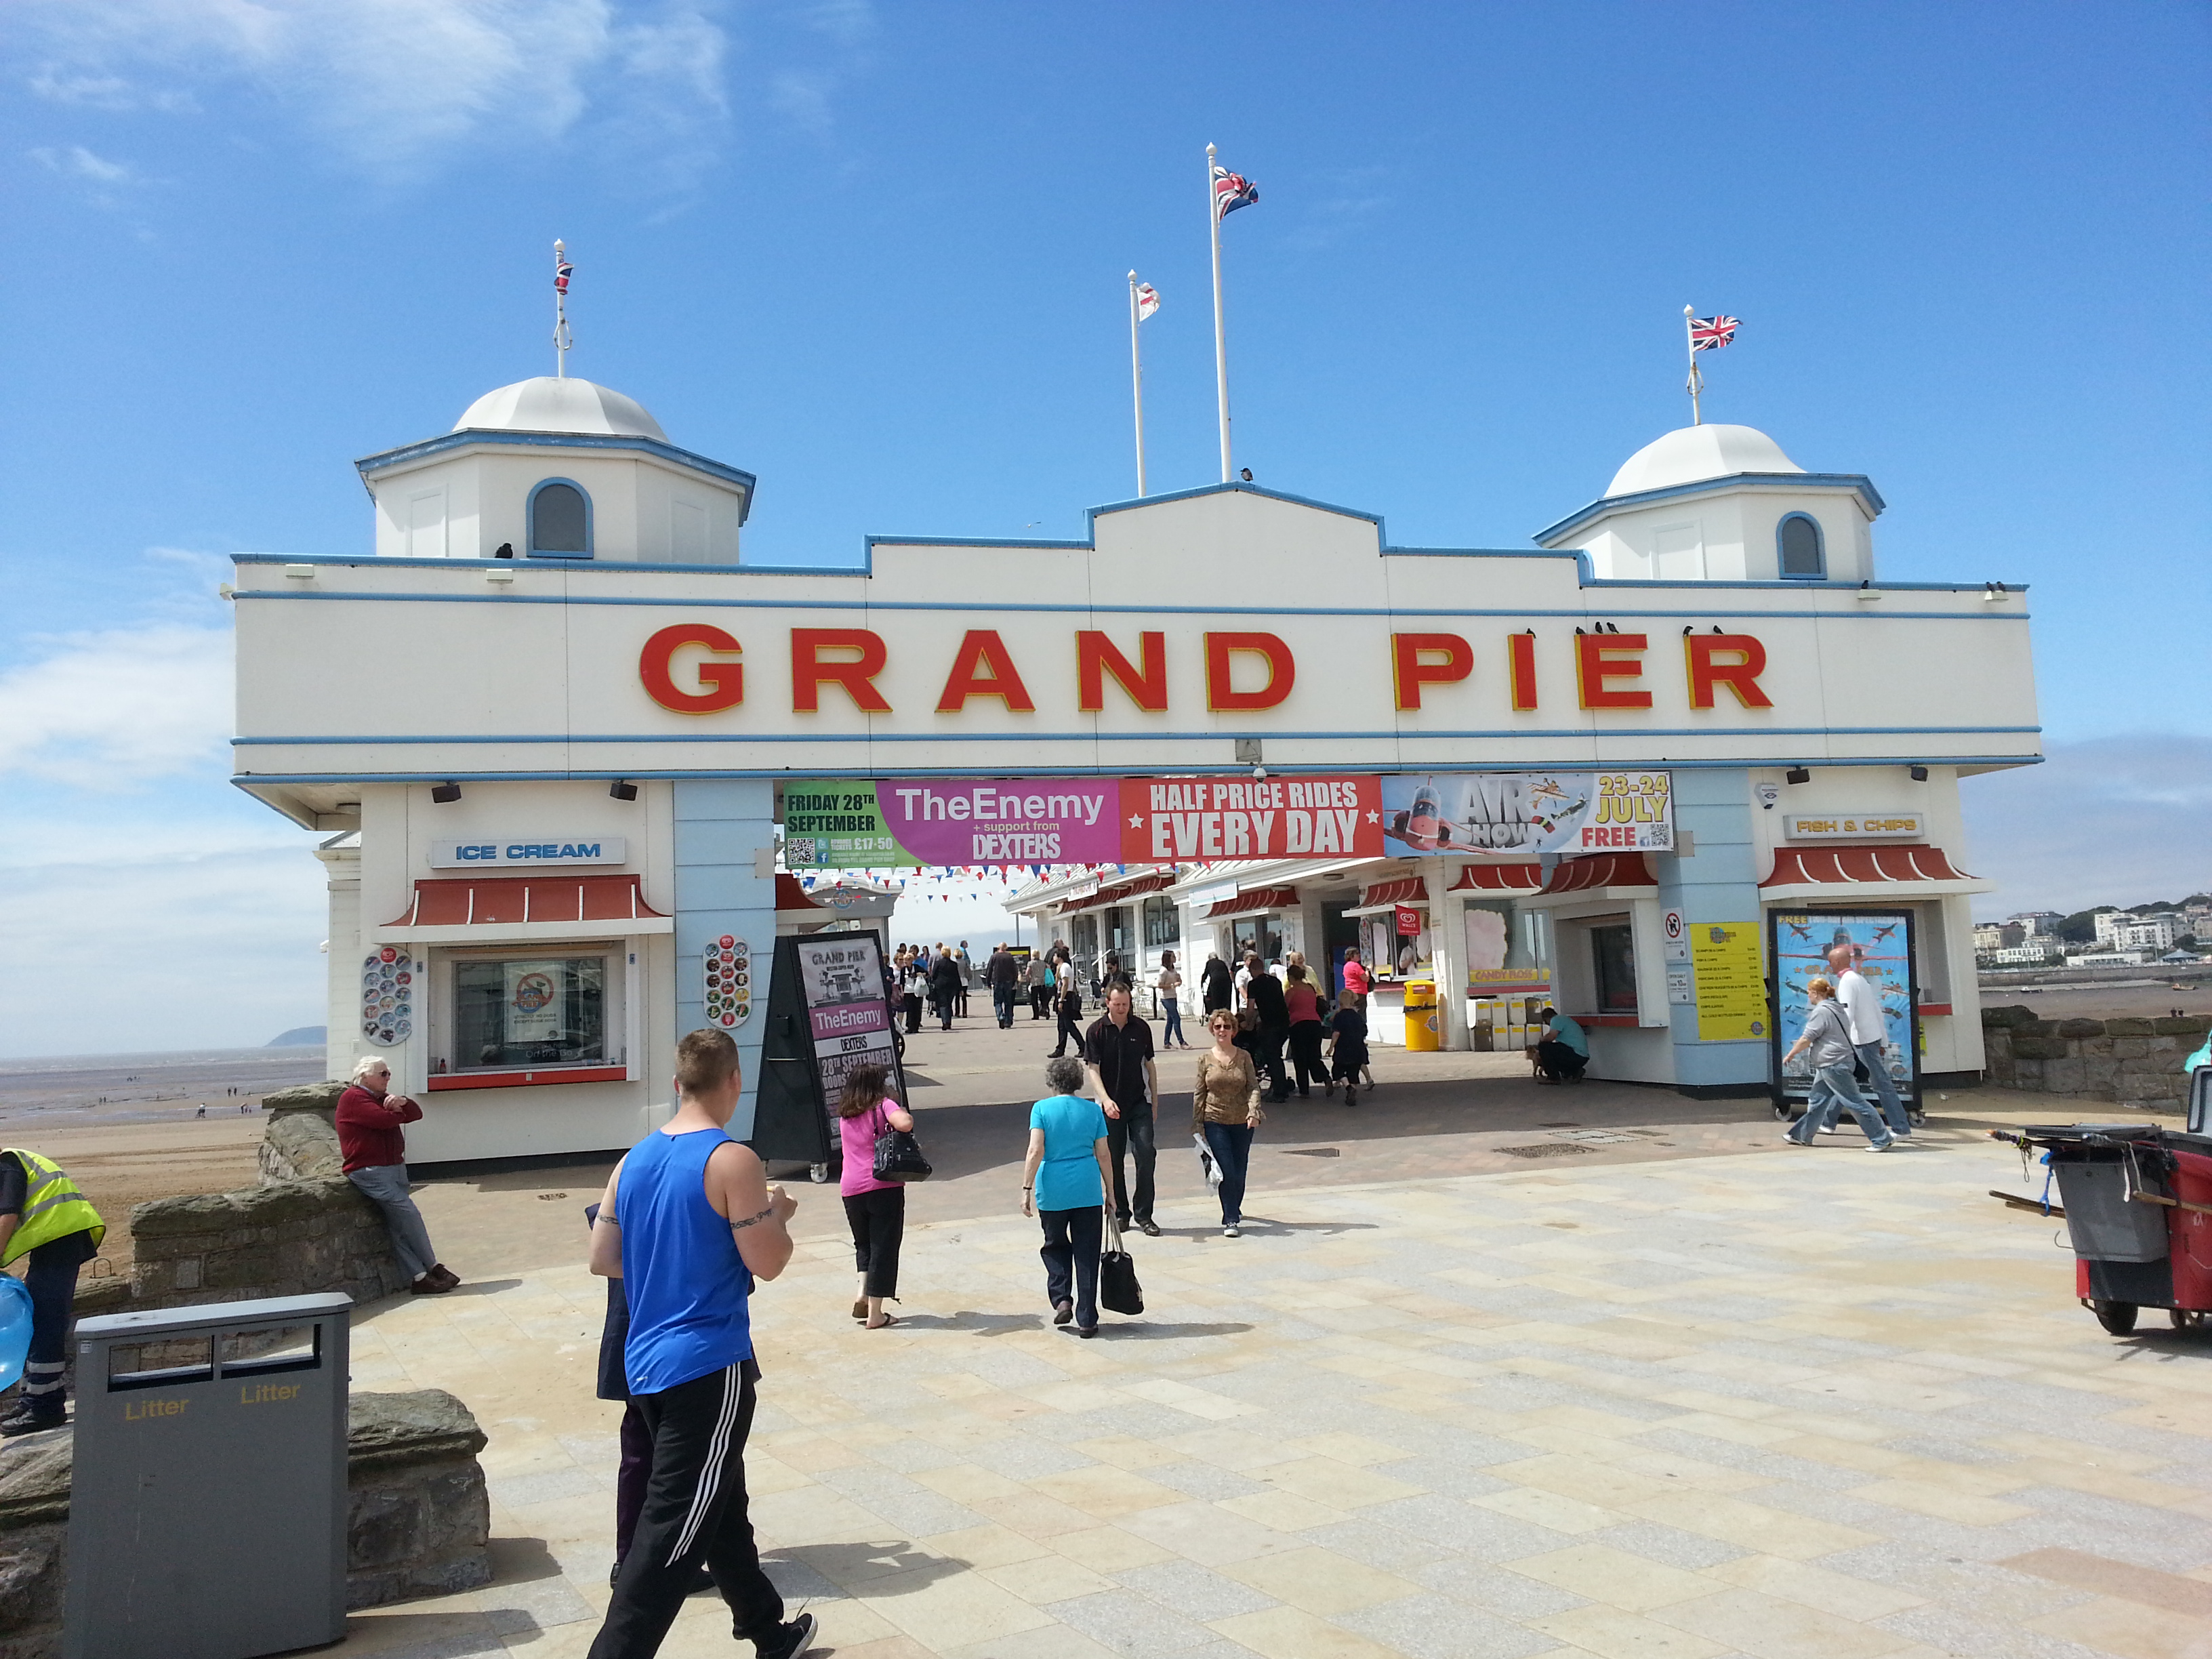 The grand pier photo